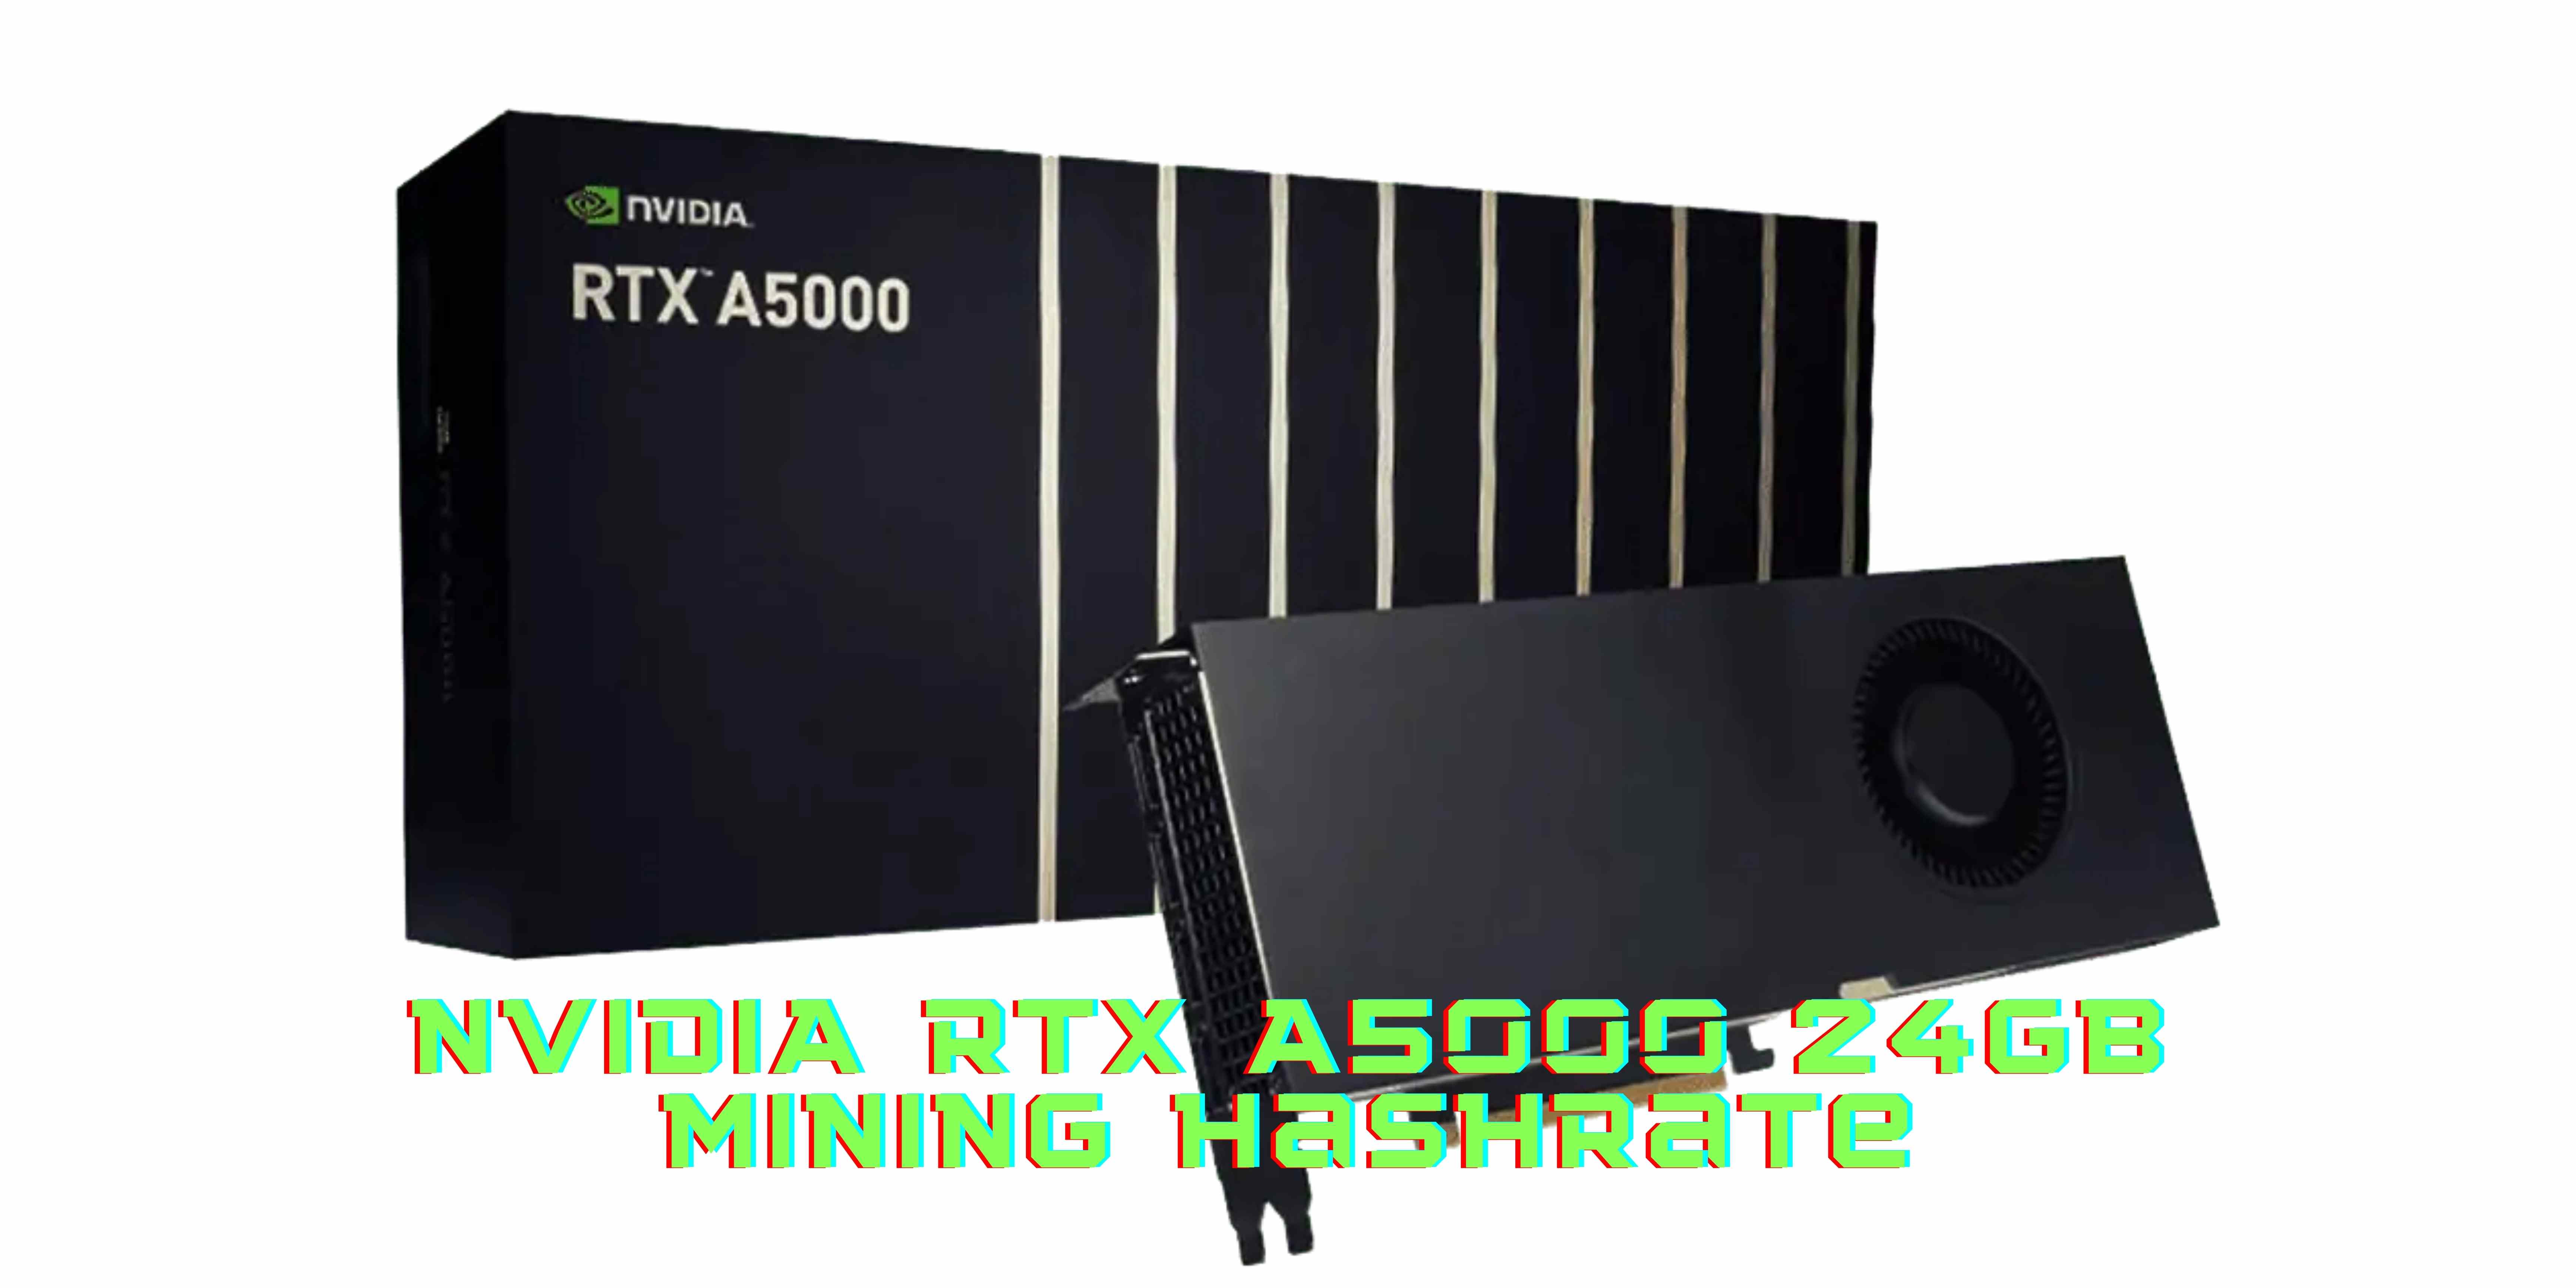 NVIDIA RTX A5000 24GB Mining Hashrate, Specifications, Overclocks, And Mining Profitability